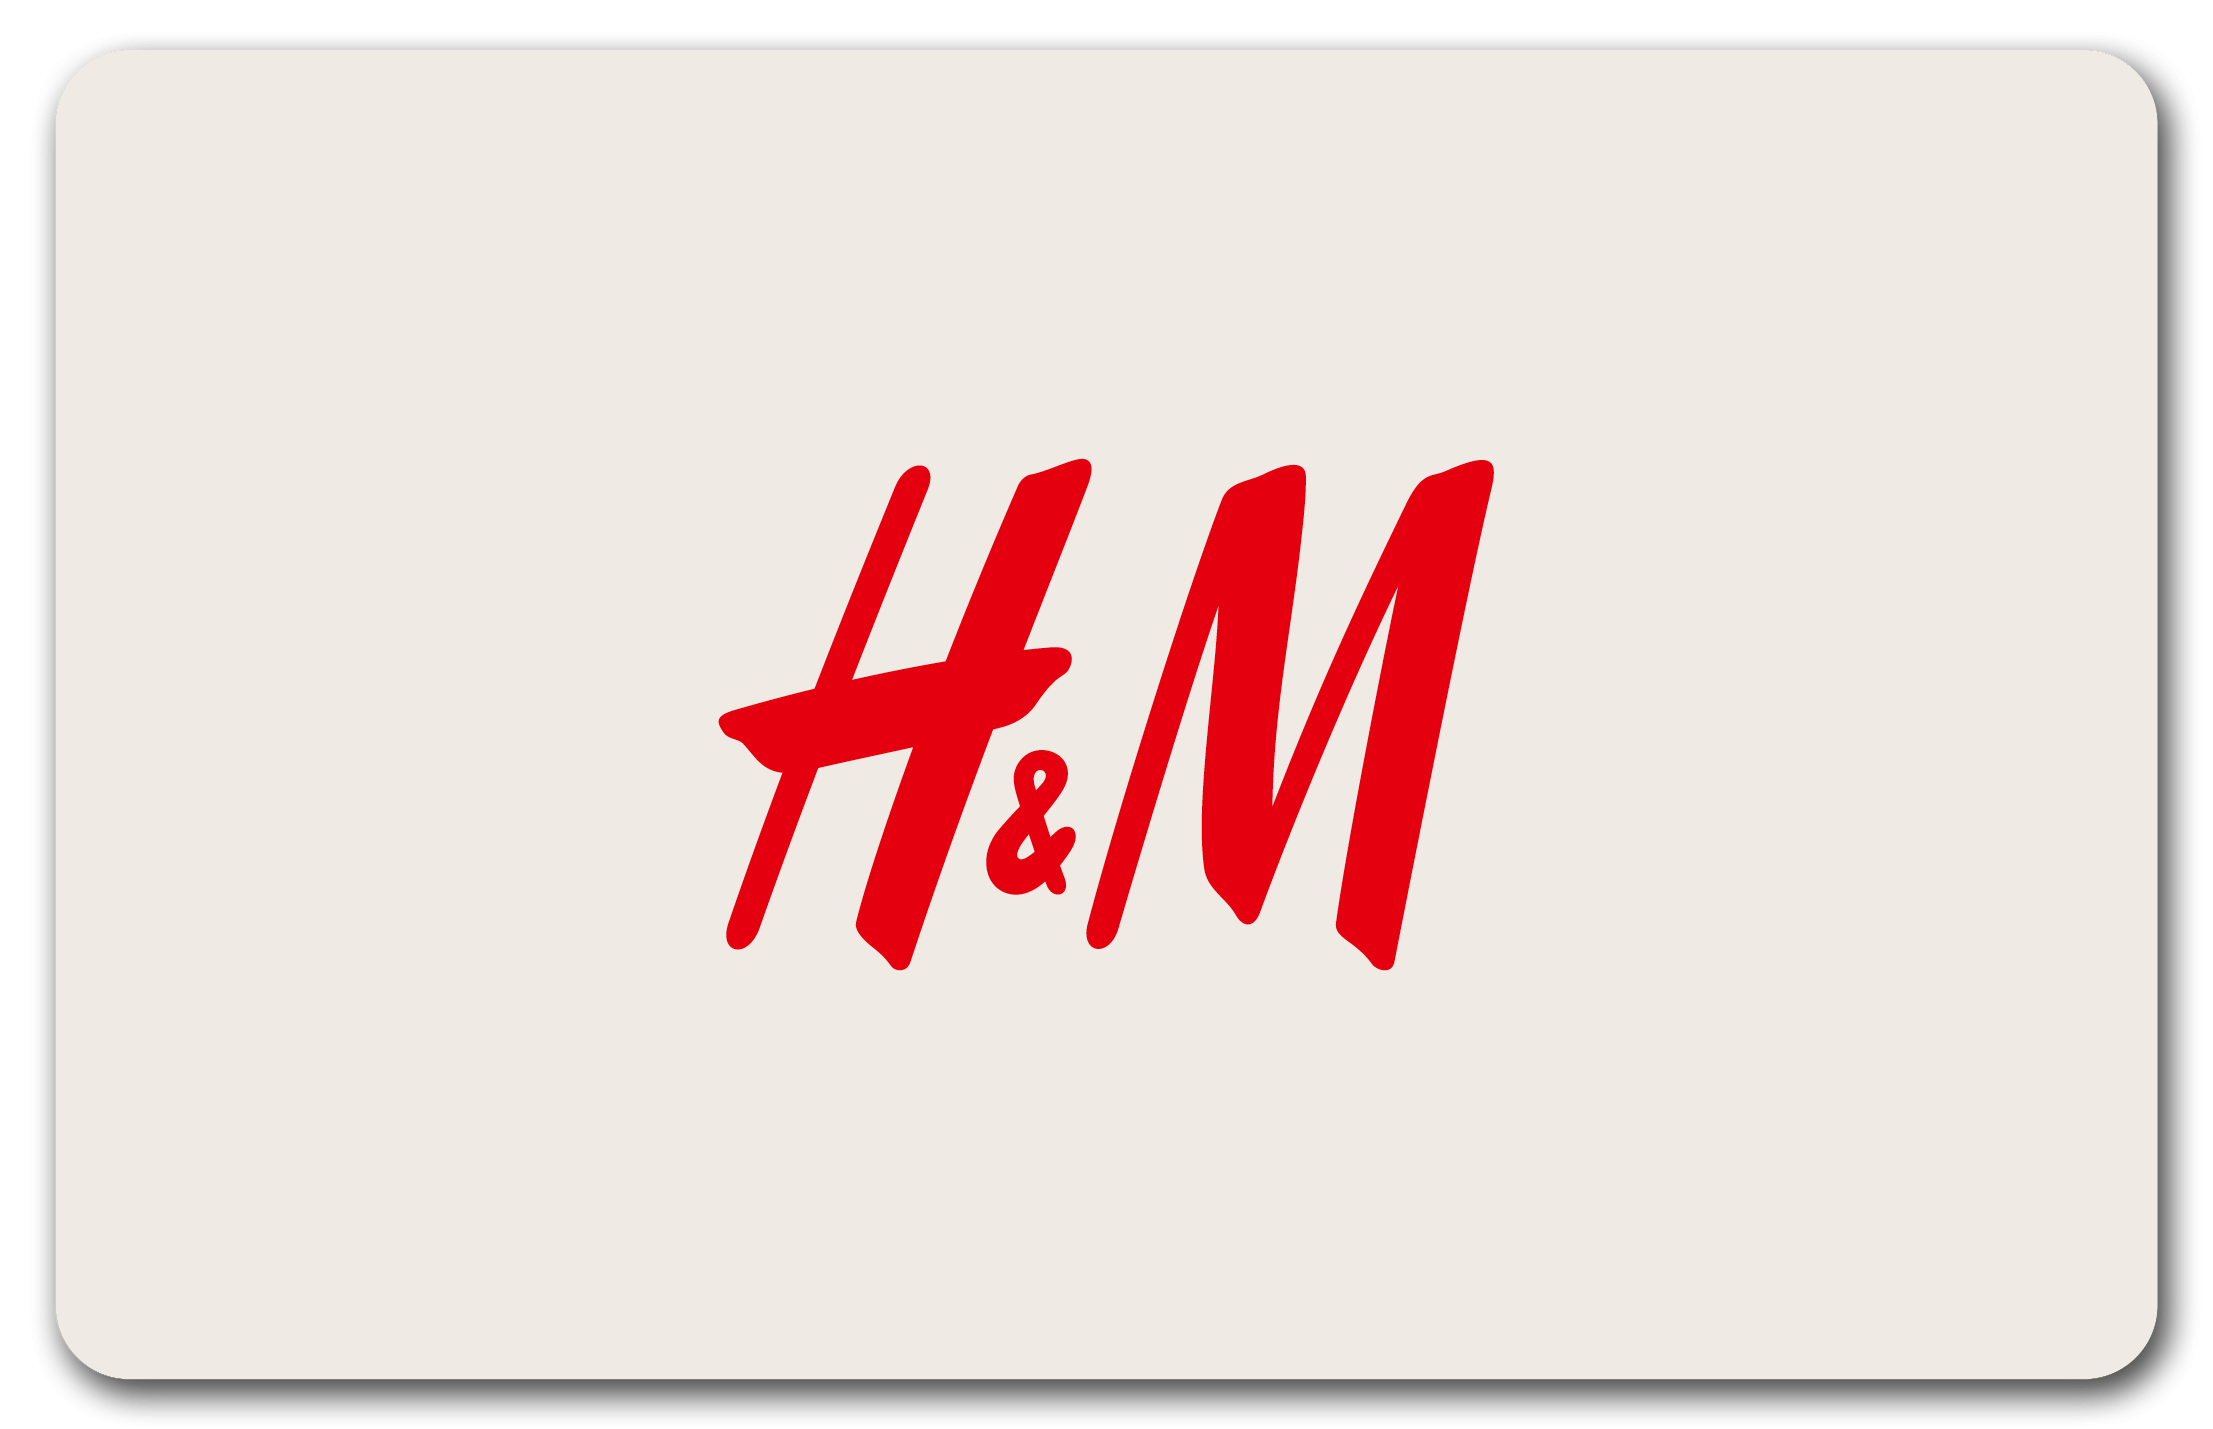 H&M Roques